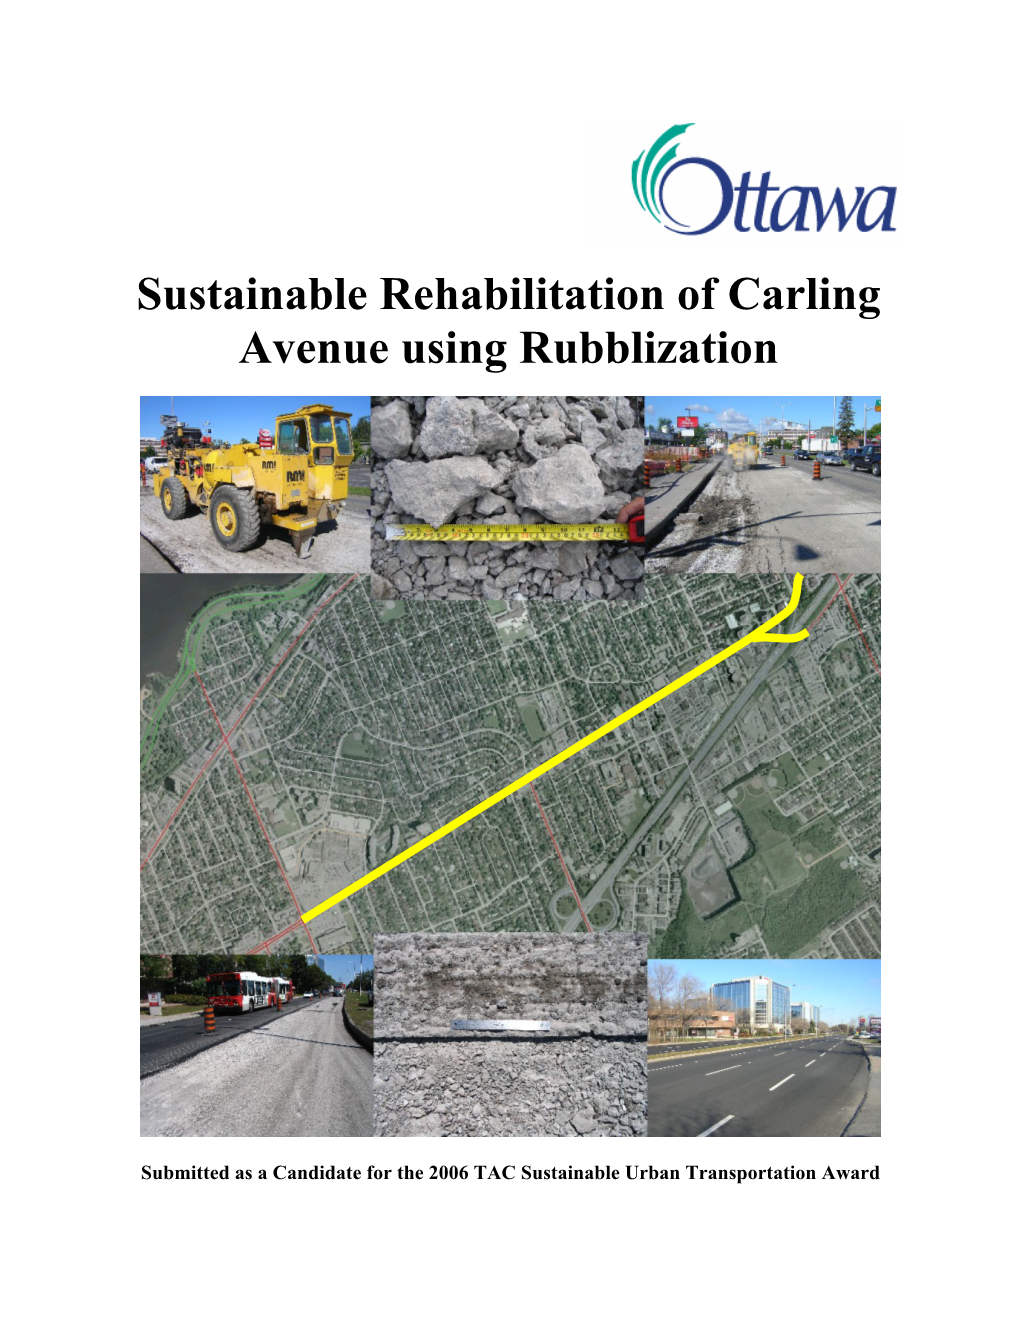 Sustainable Rehabilitation of Carling Avenue Using Rubblization